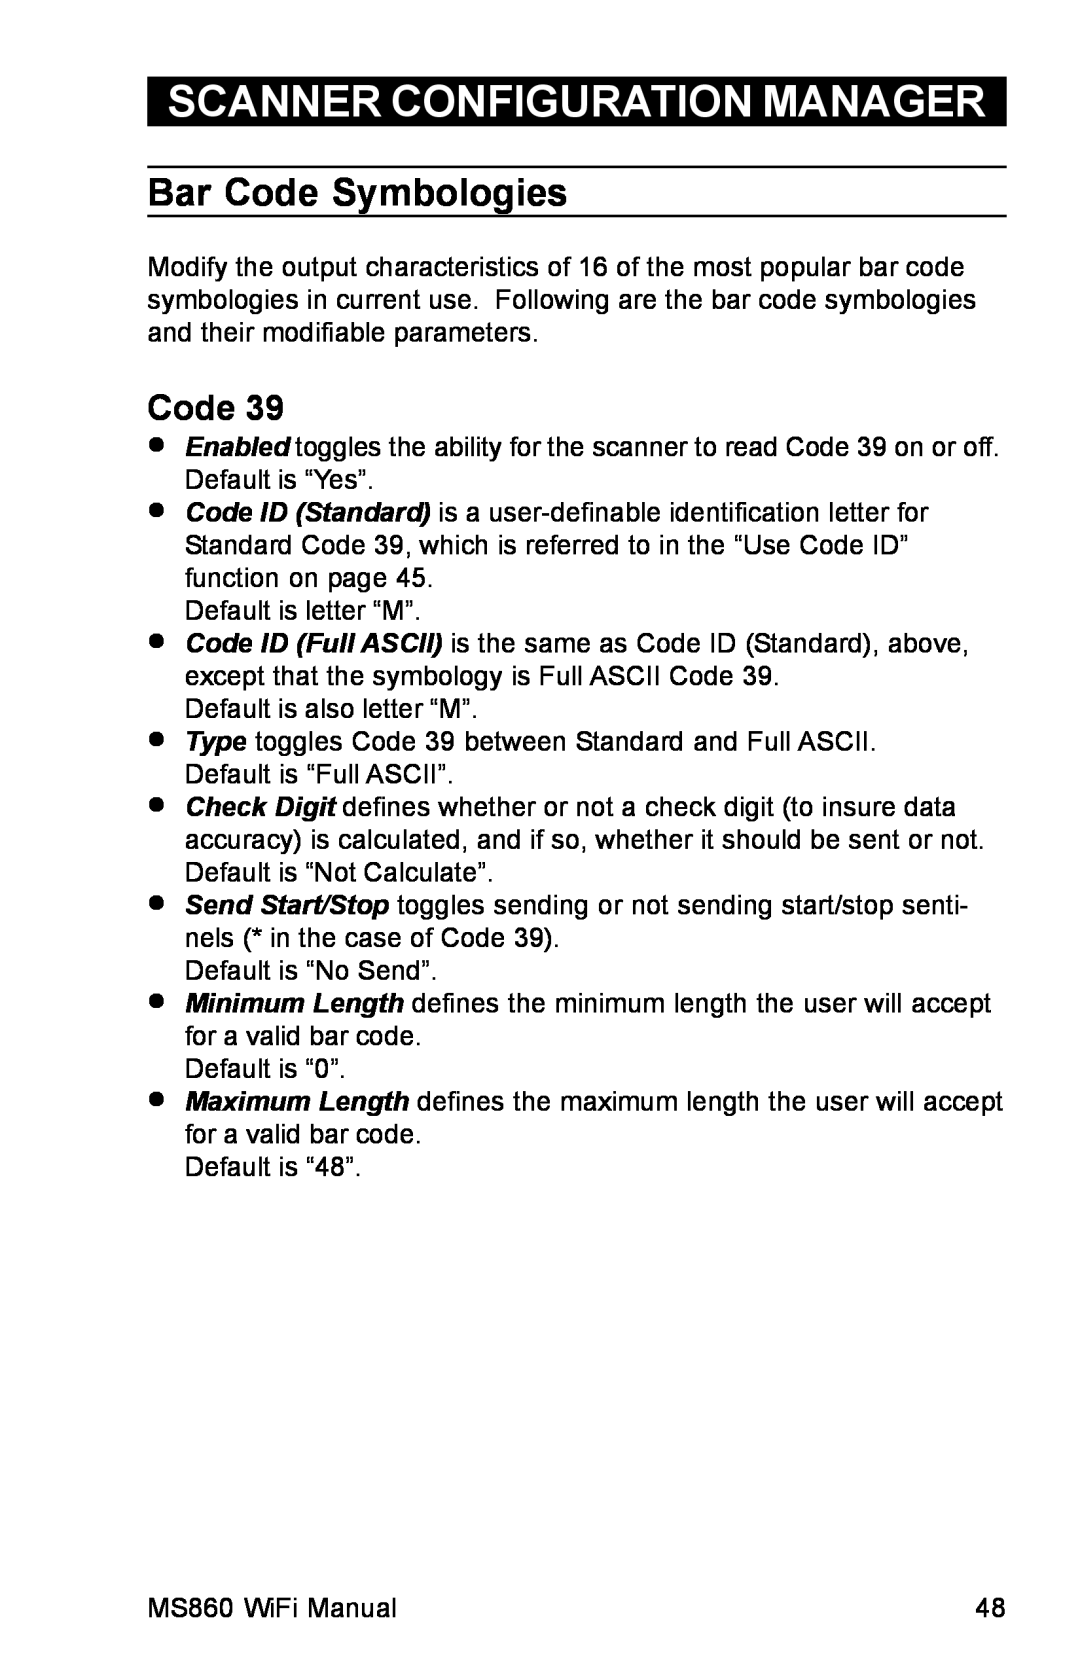 Unitech MS860 manual Bar Code Symbologies, Scanner Configuration Manager 